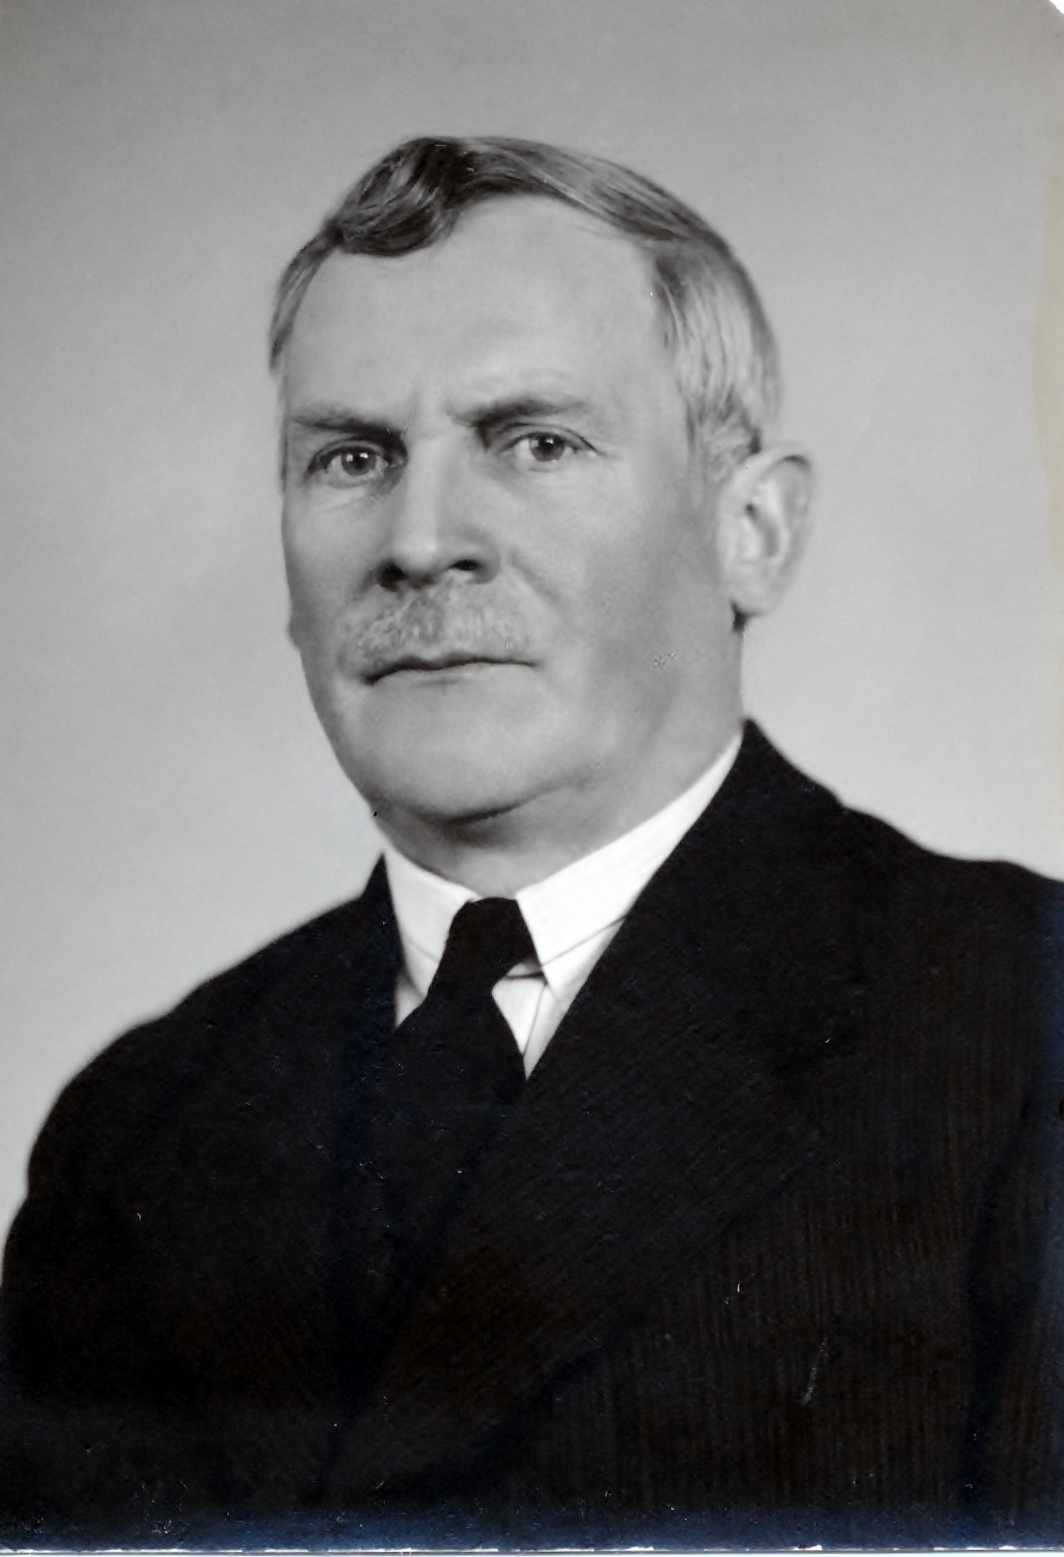 Johan Tillman (1885 - 1965)